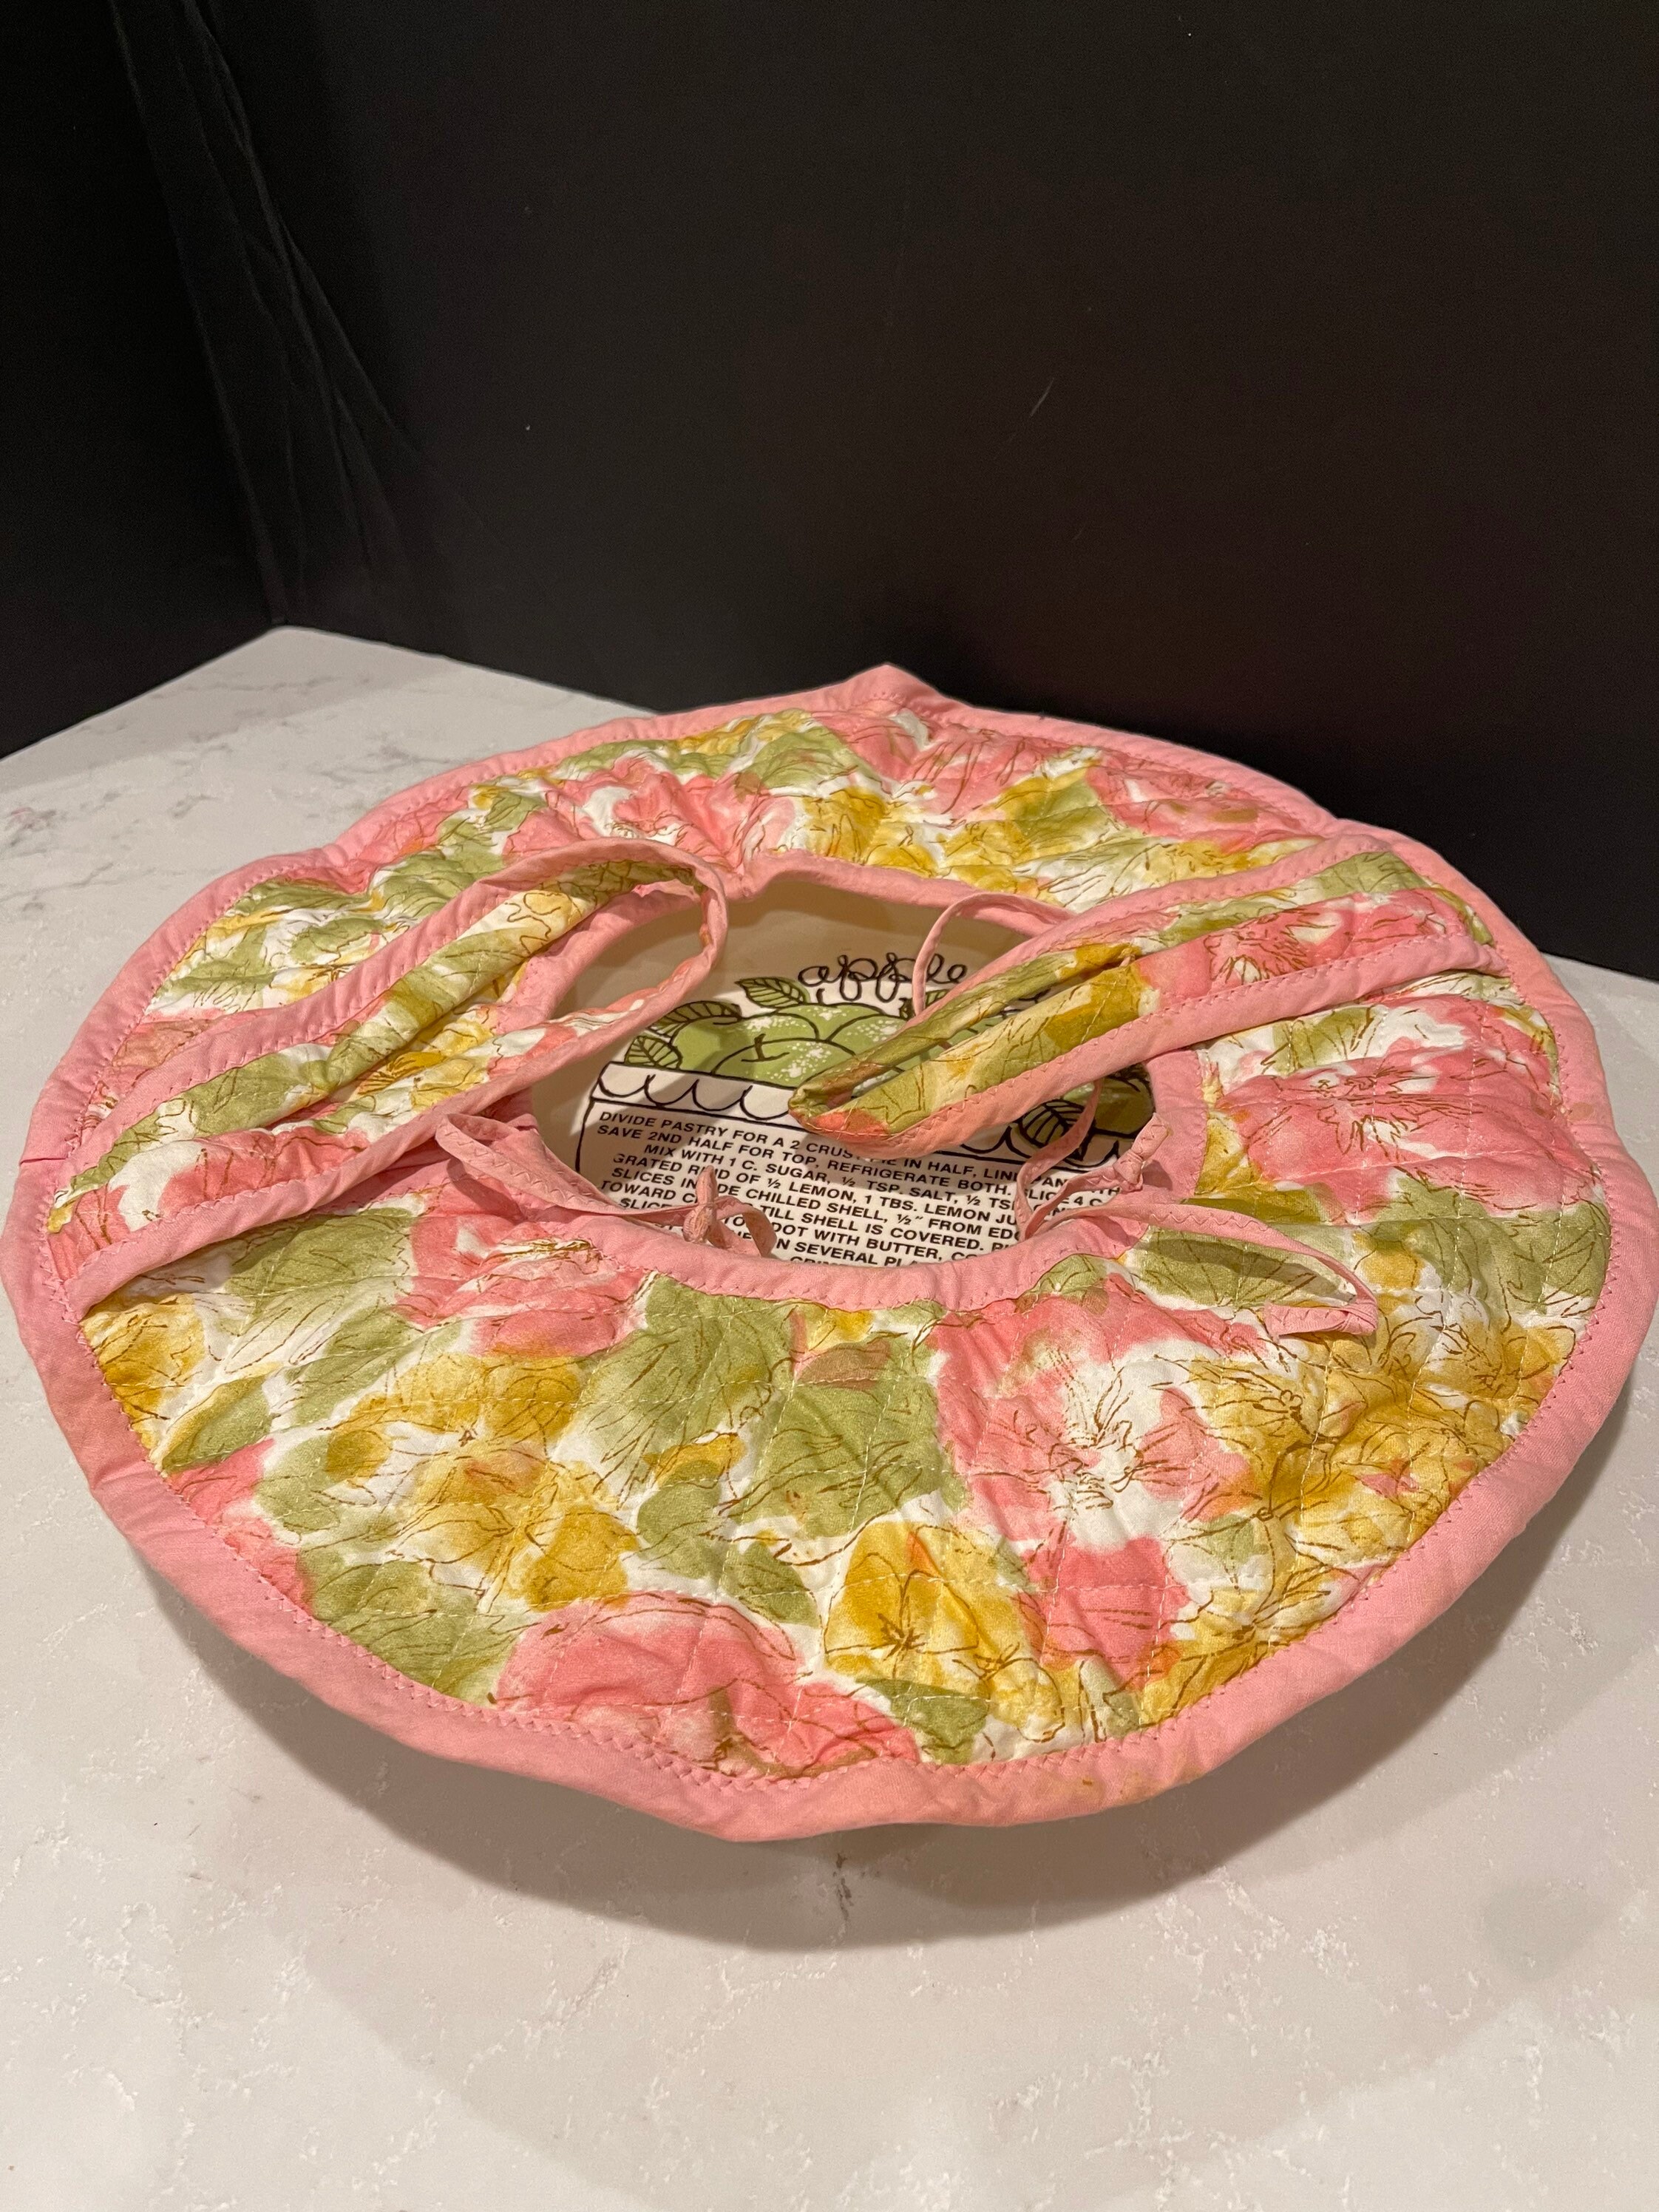 Vintage Pie Cozy Casserole Tote mid century pink floral